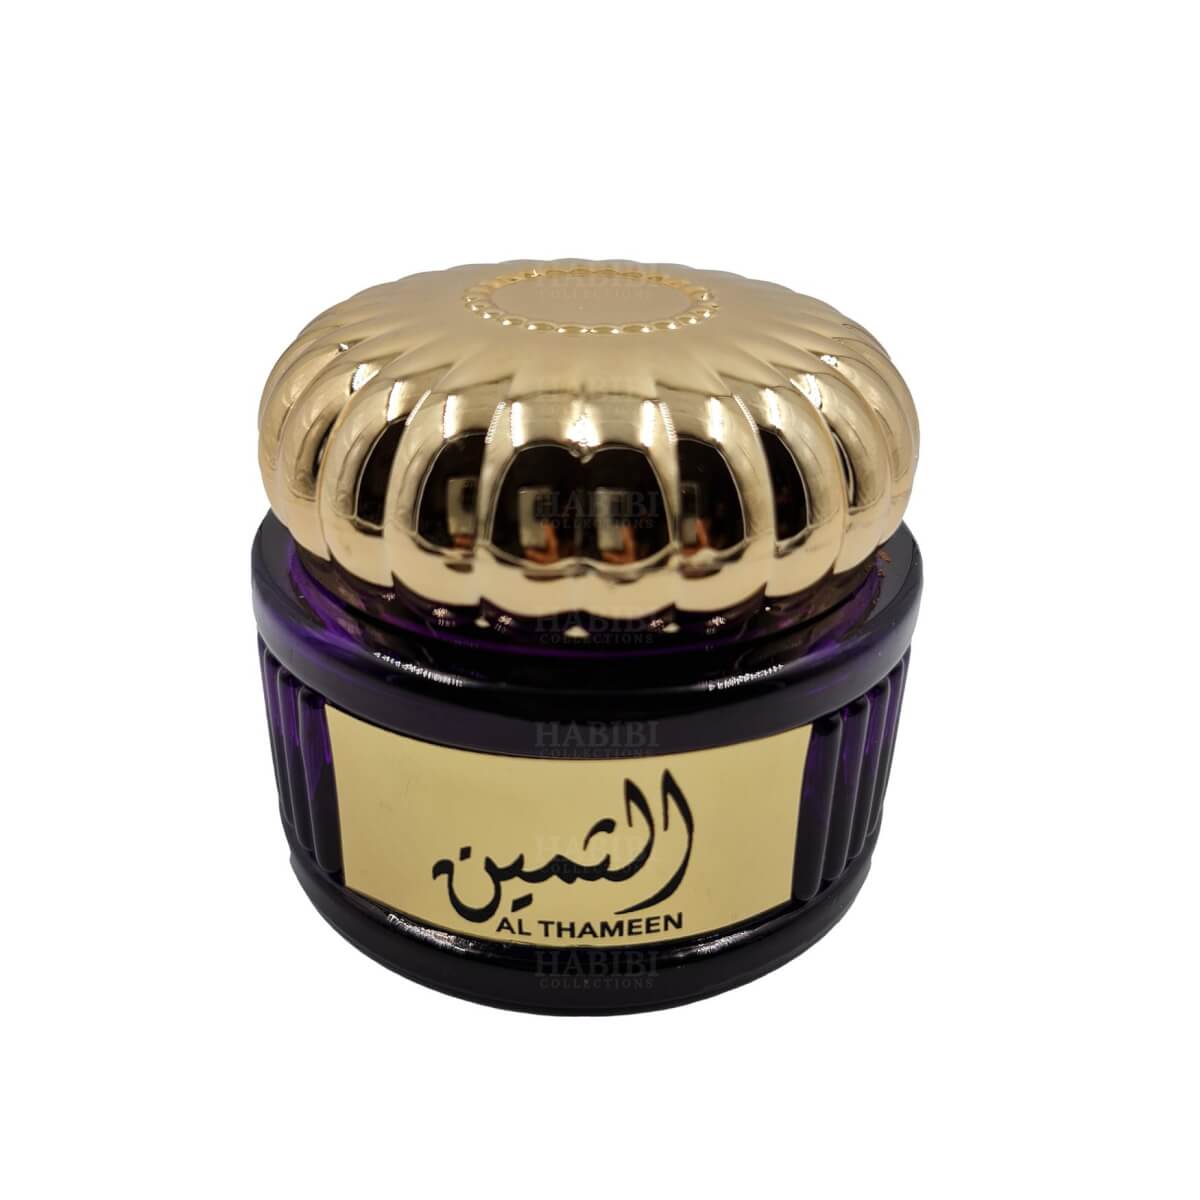 Al Thameen Bakhoor / Bukhoor (Arabian Incense) By By Lataffa